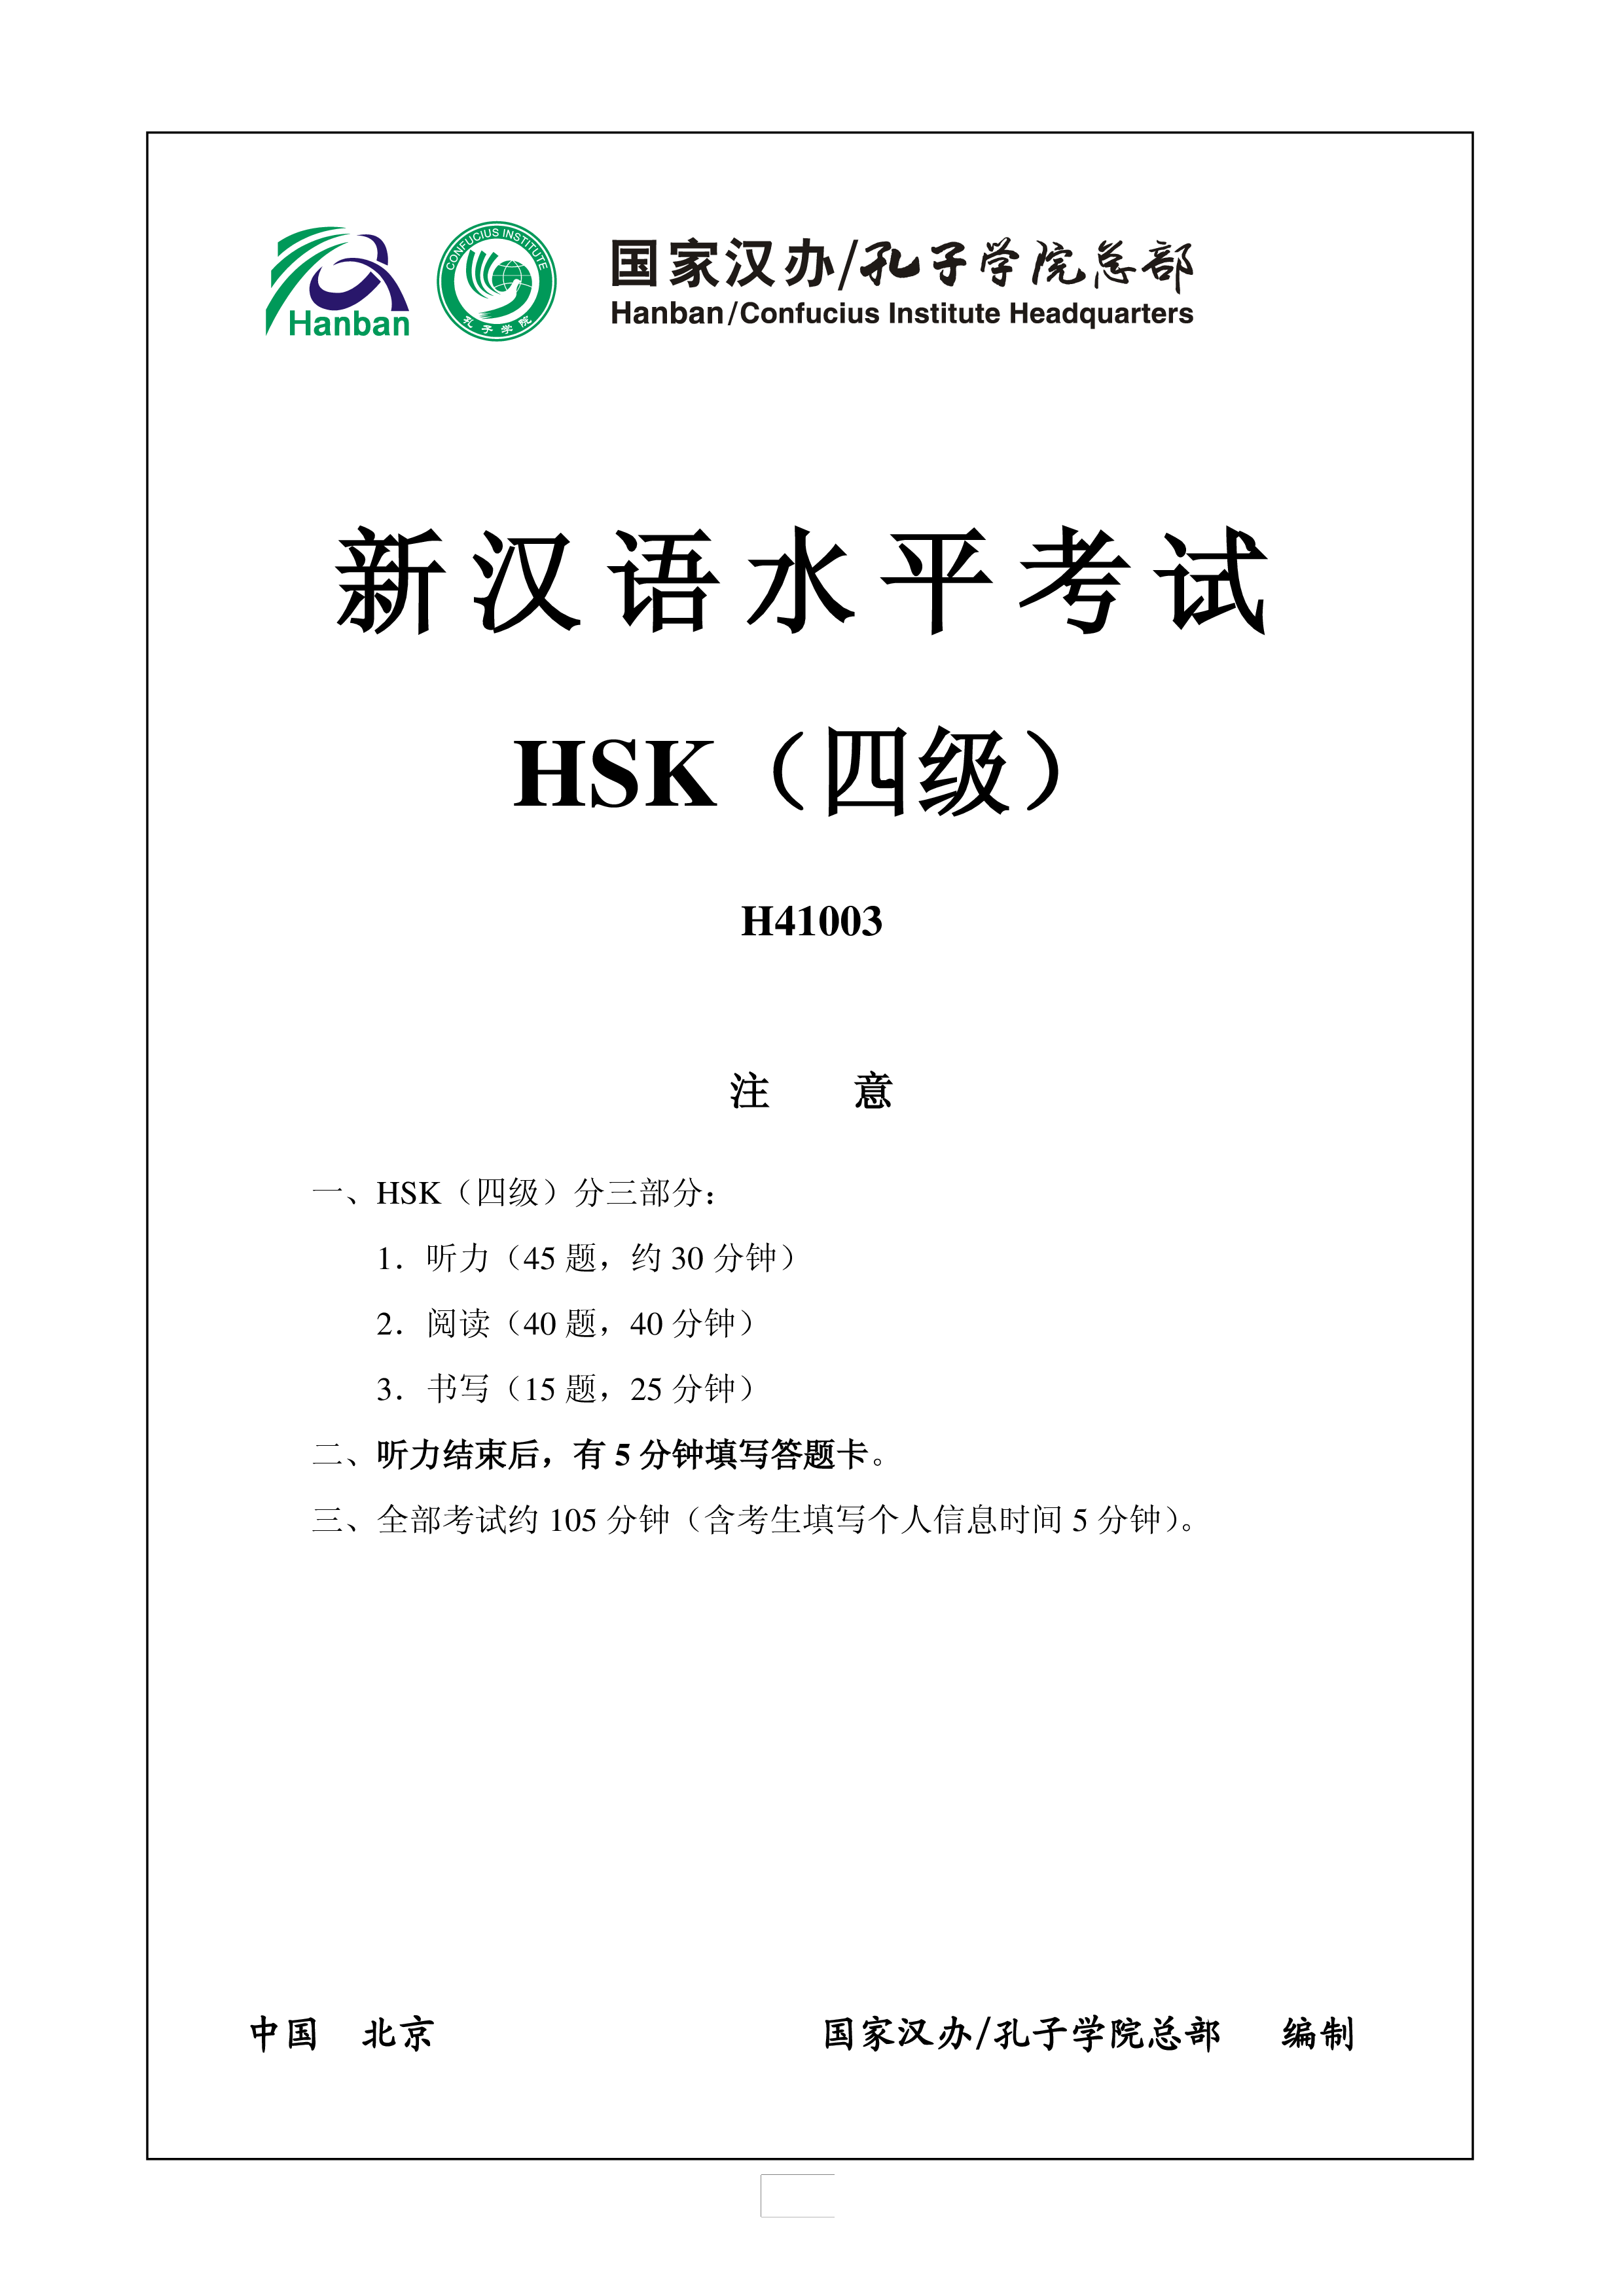 hsk4 chinese exam including answers # hsk h41003 Hauptschablonenbild